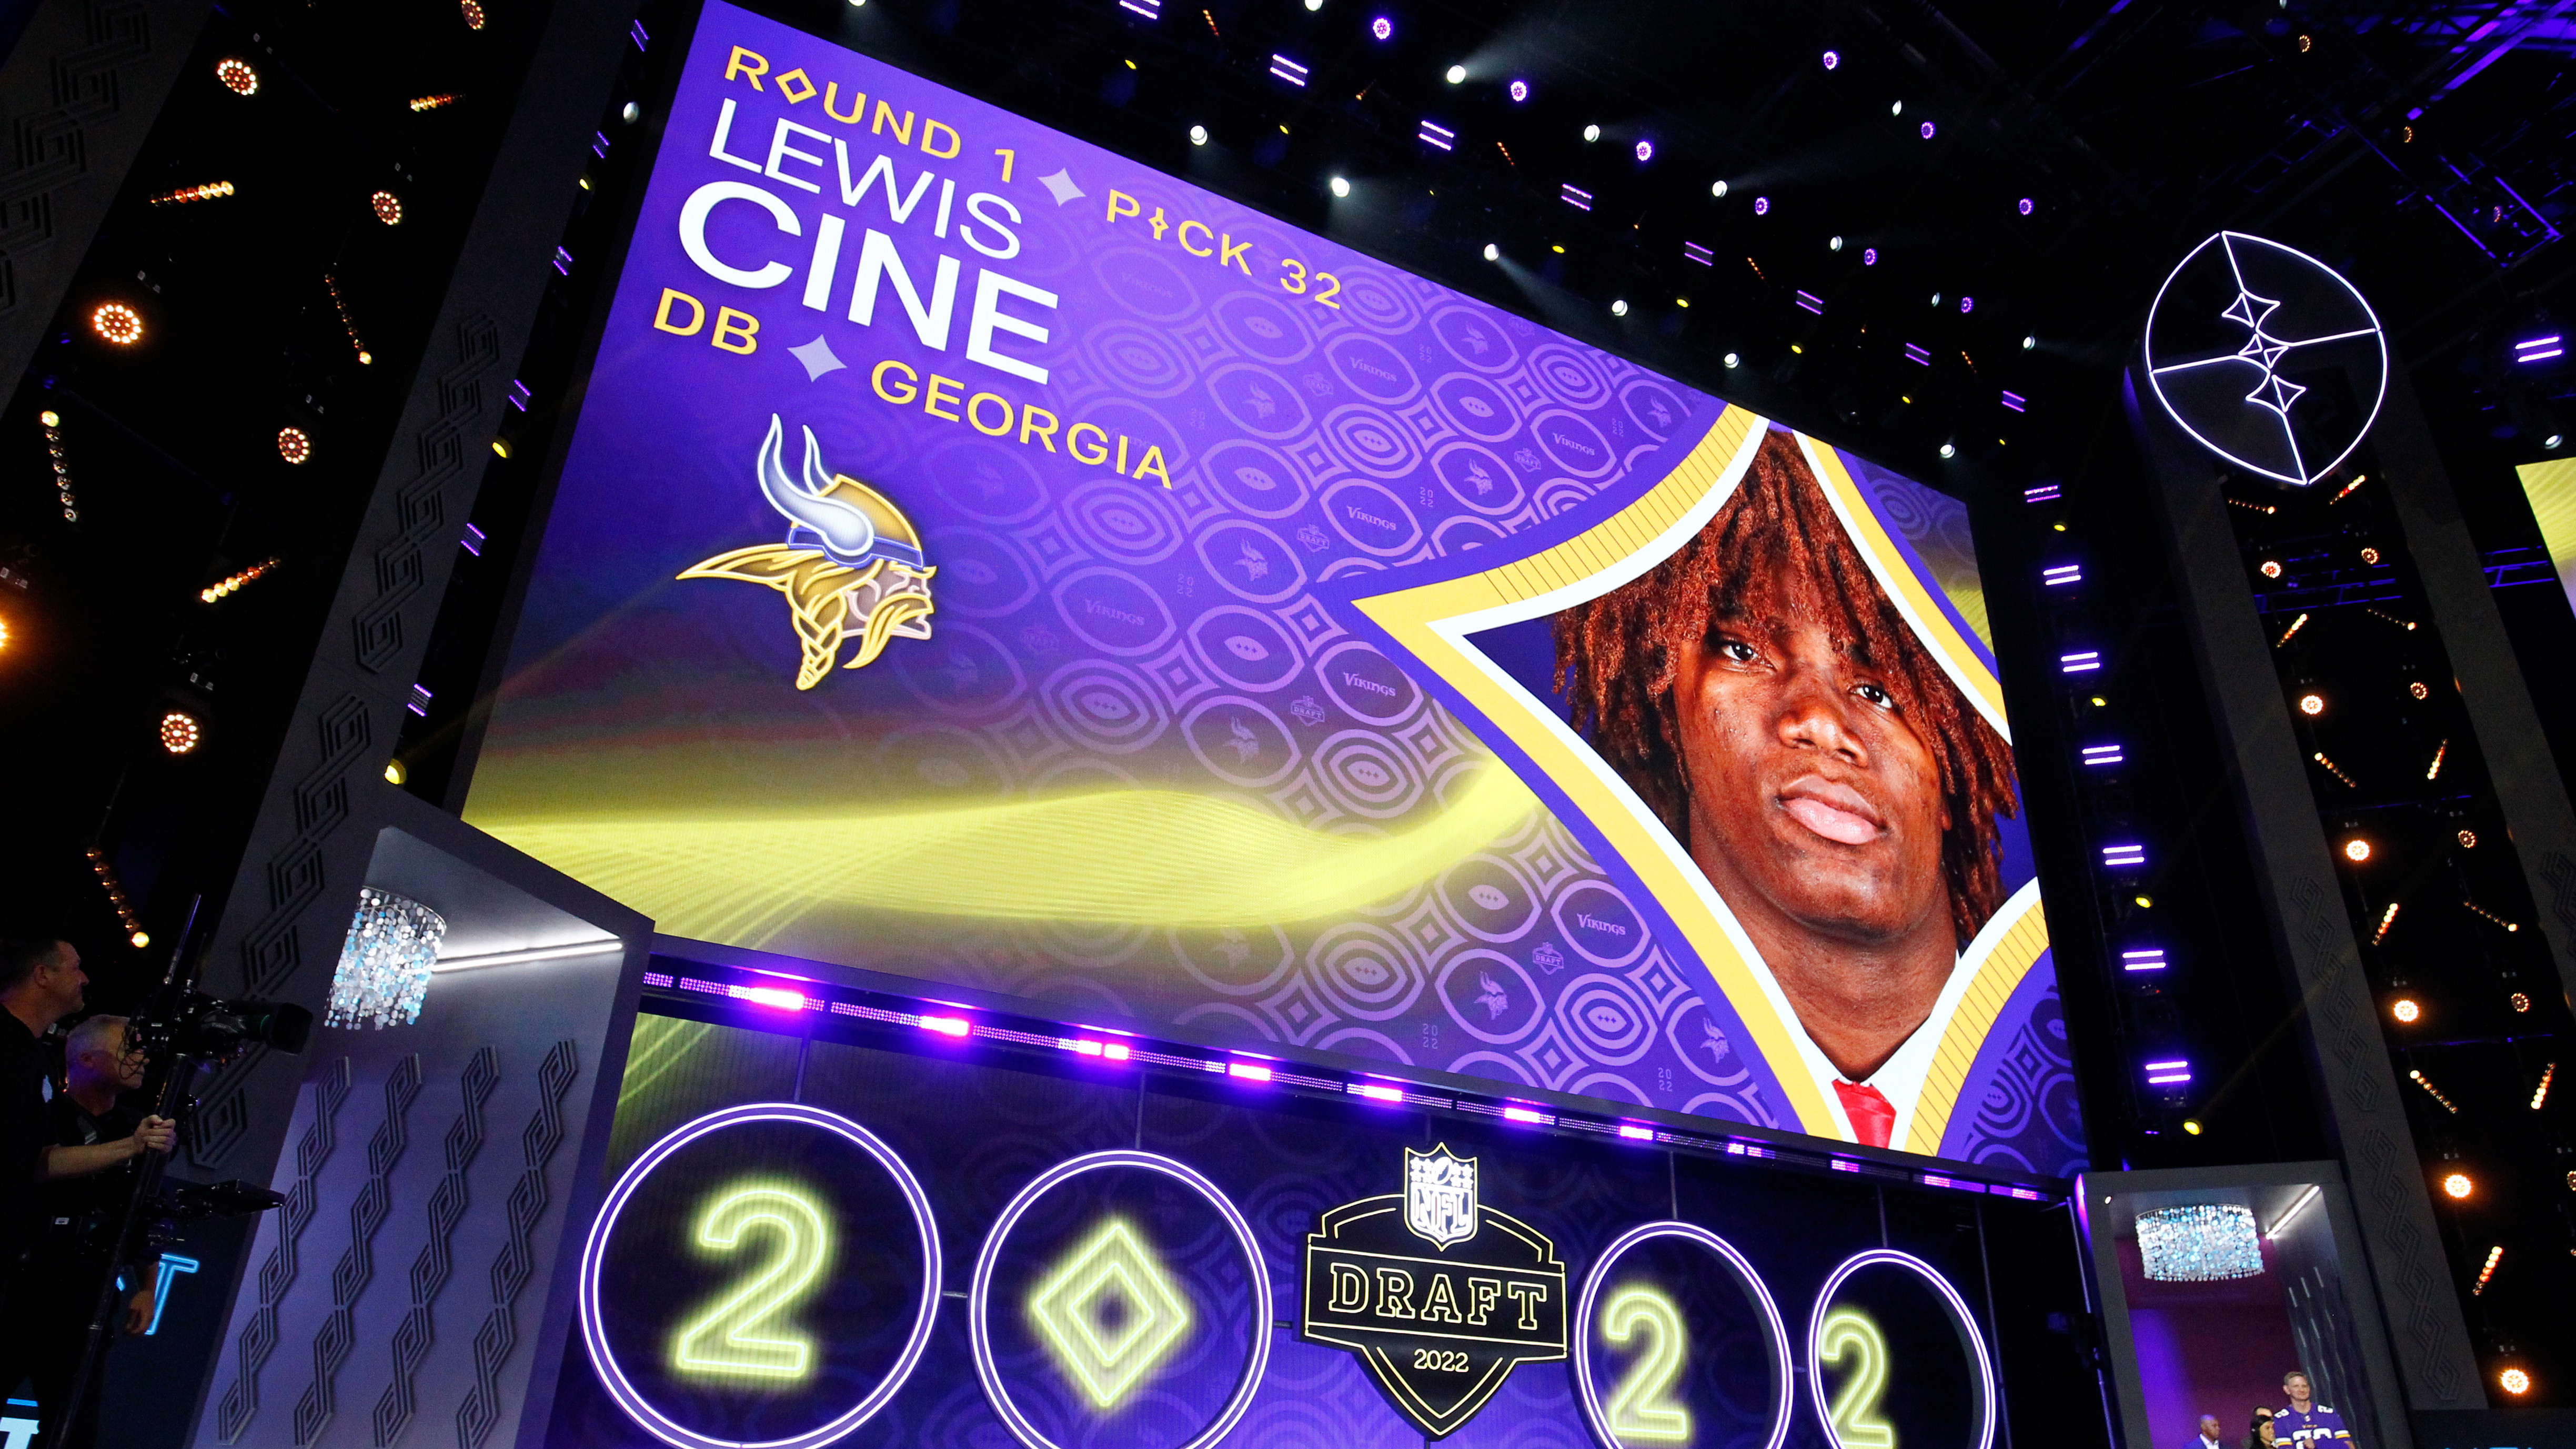 Lewis Cine NFL Draft